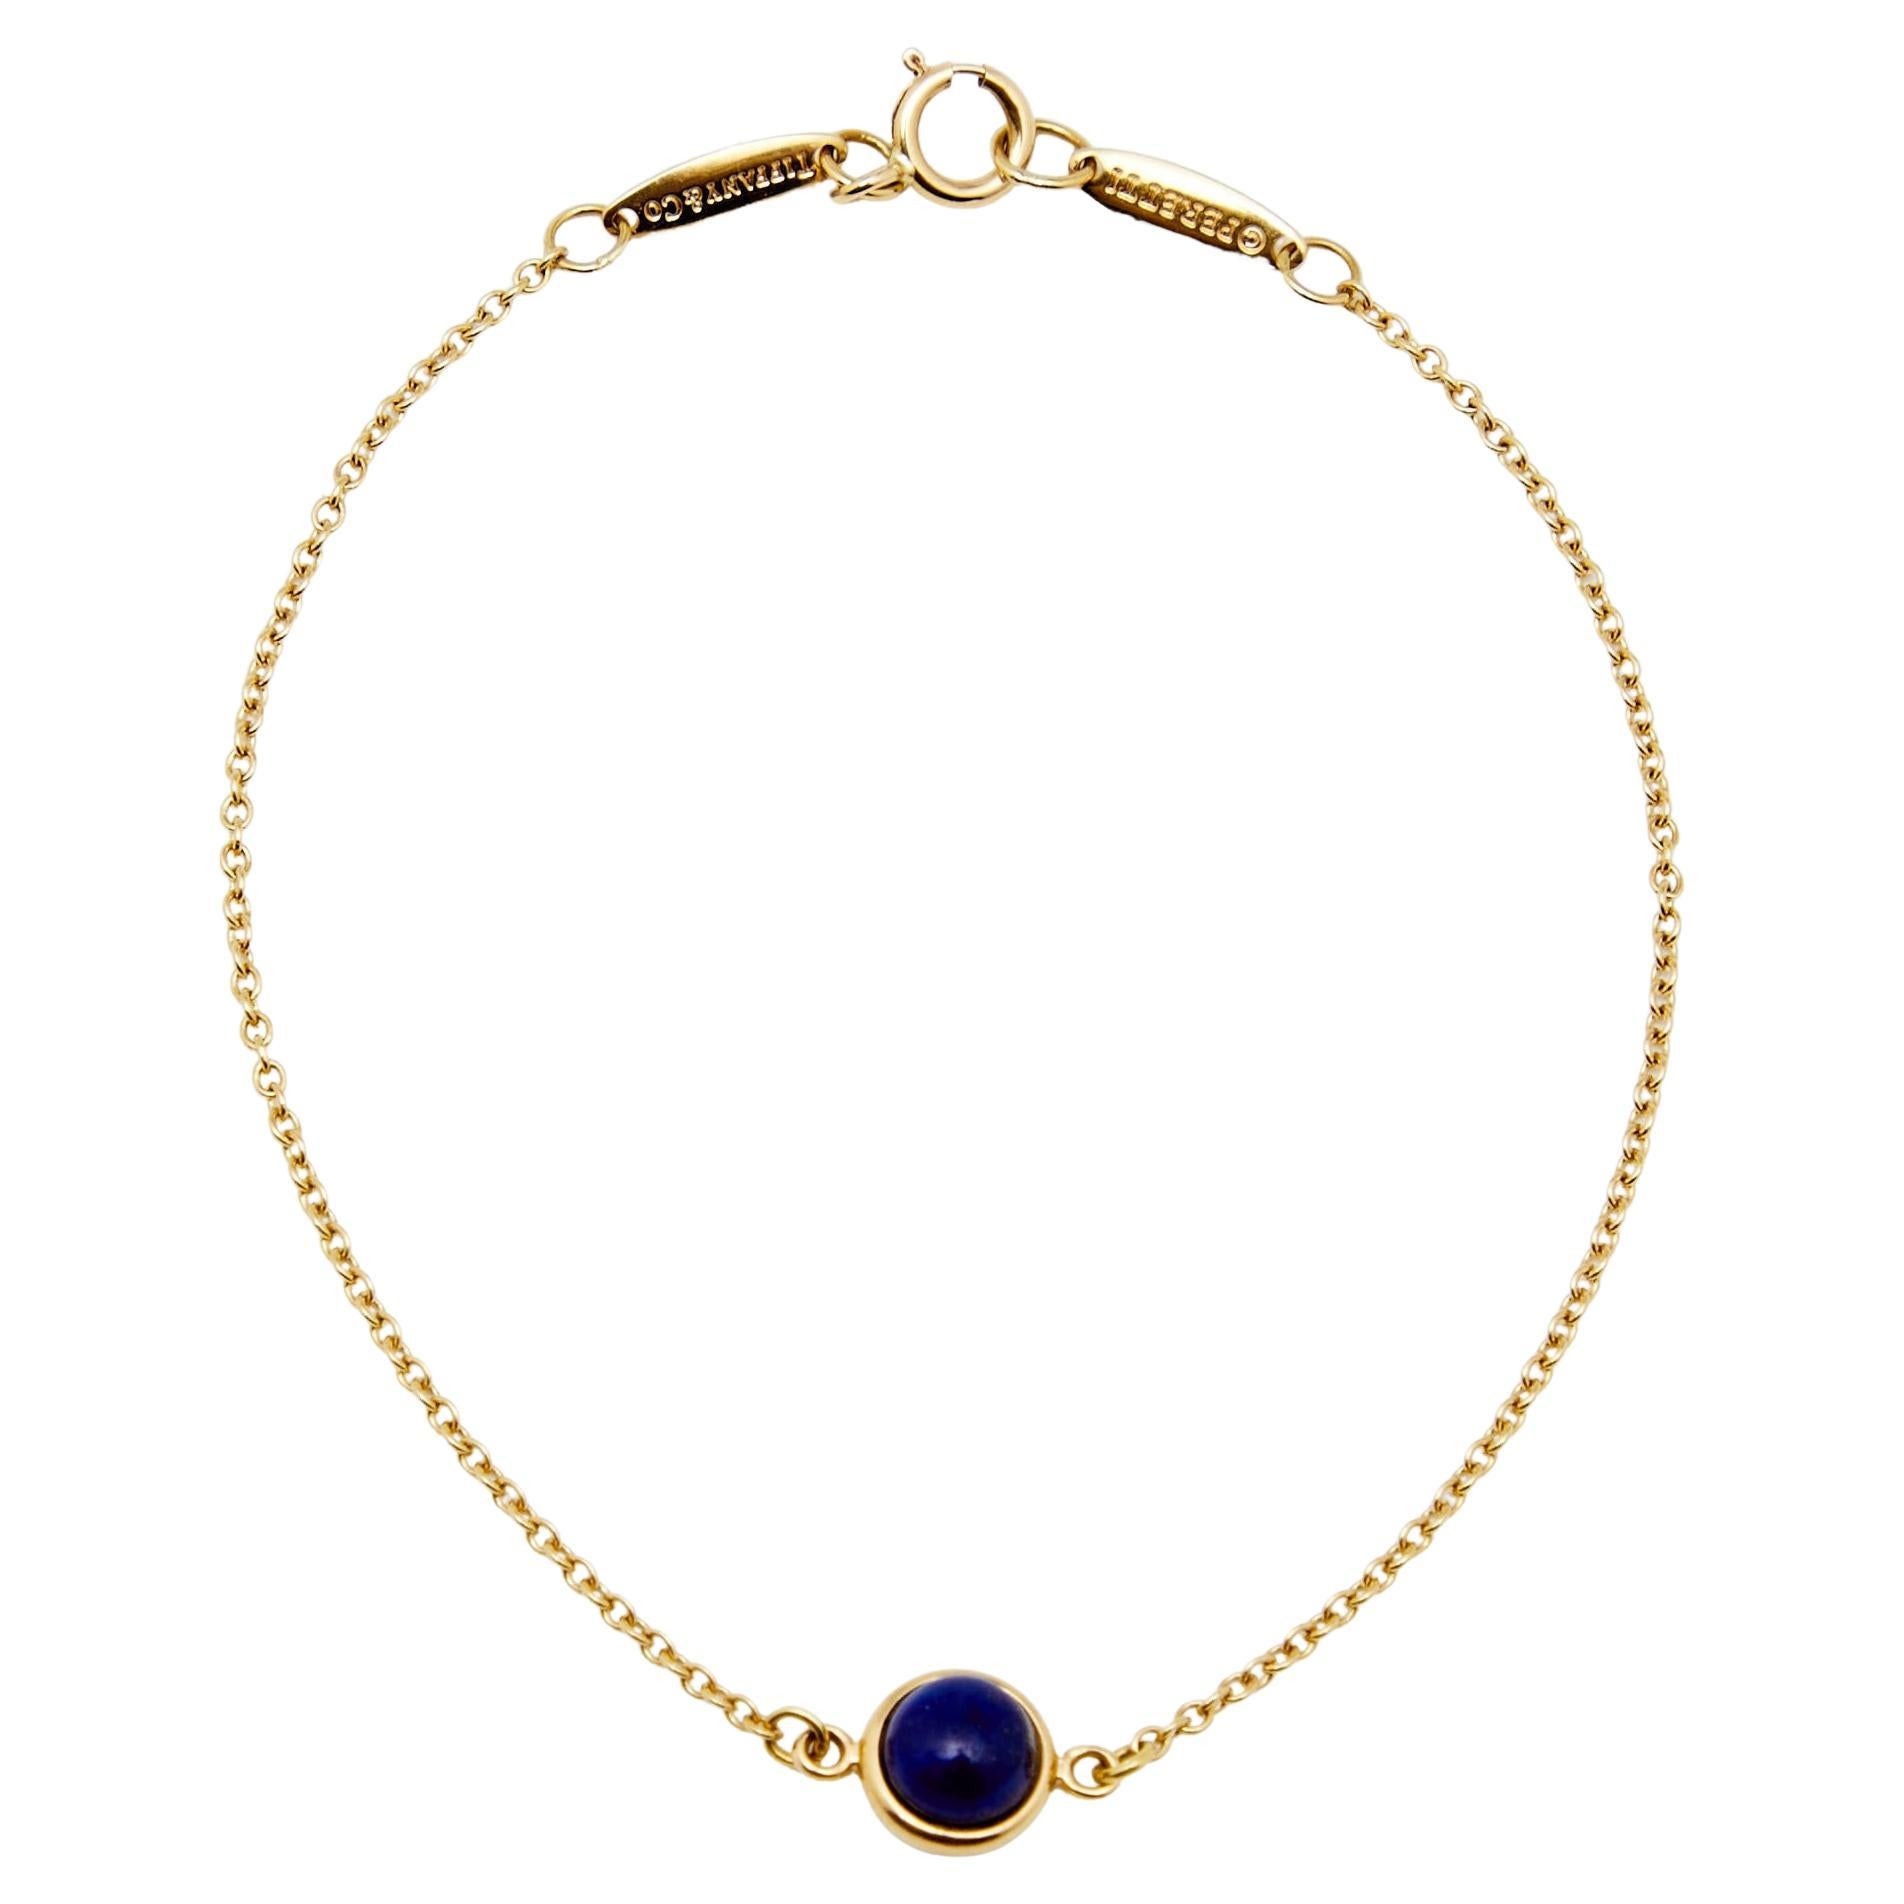 Tiffany & Co. Color by the Yard Lapis Lazuli 18k Yellow Gold Bracelet